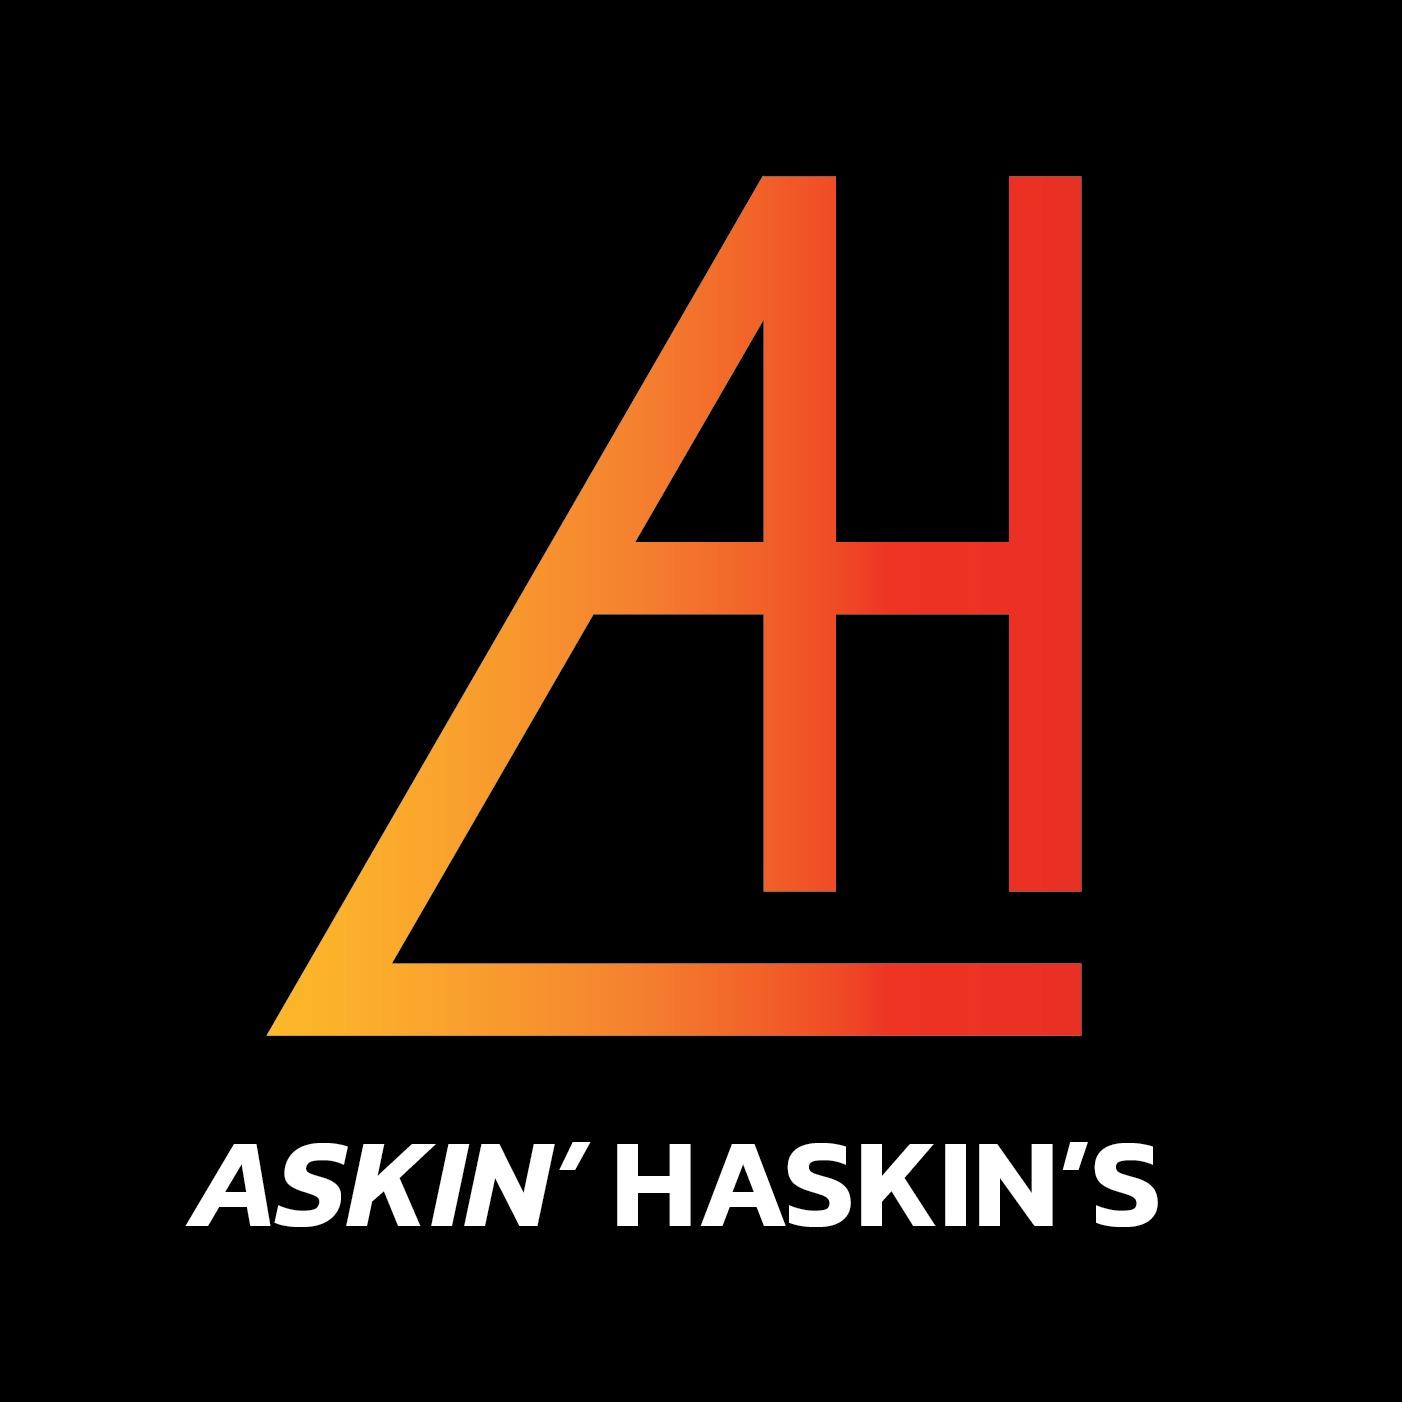 Askin' Haskin's